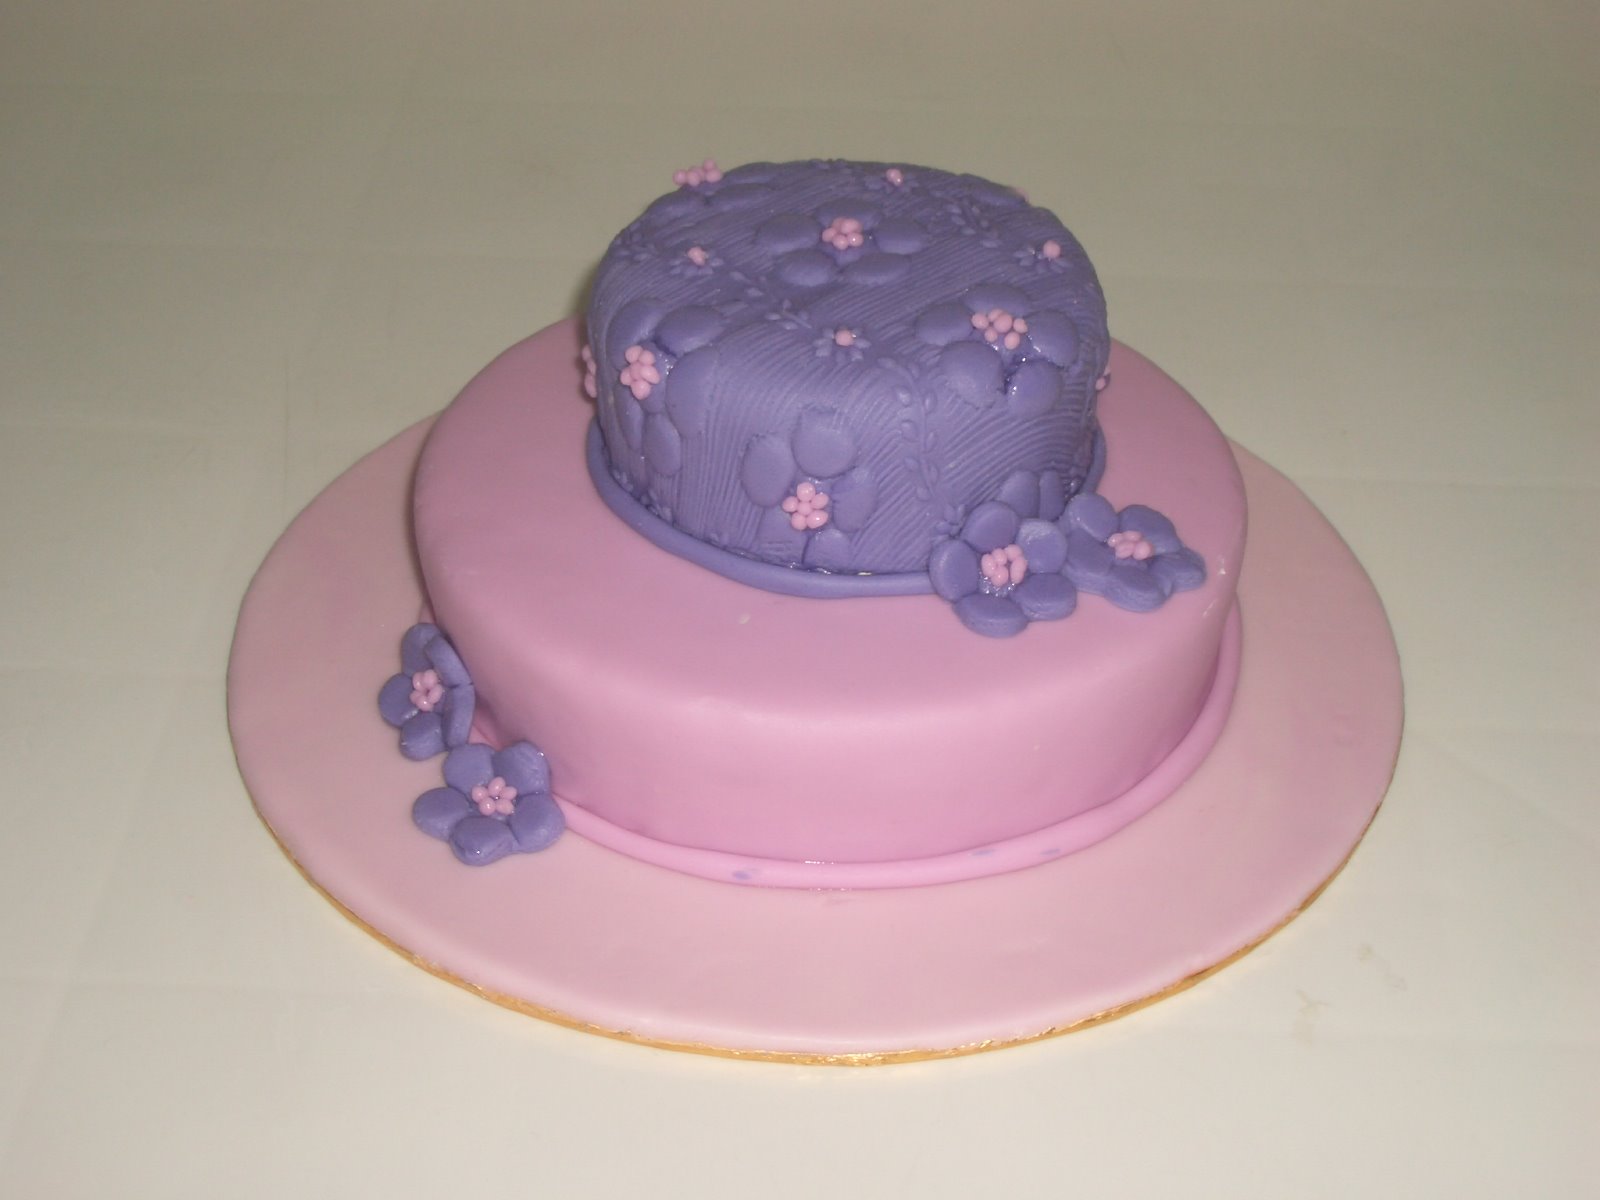 Pink and Purple cake